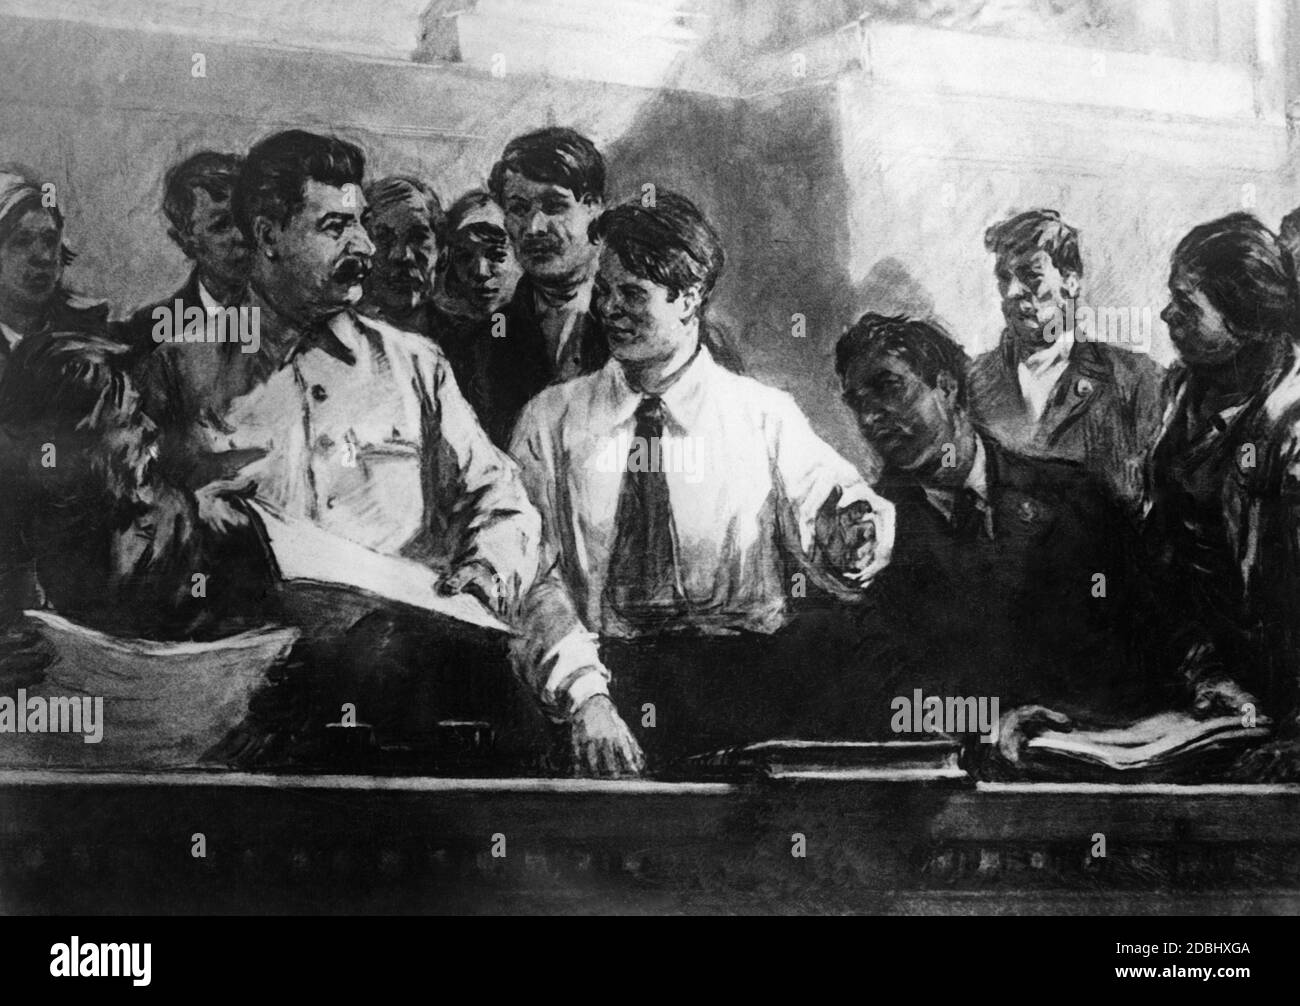 Joseph W. Stalin, politico, URSS Foto Stock